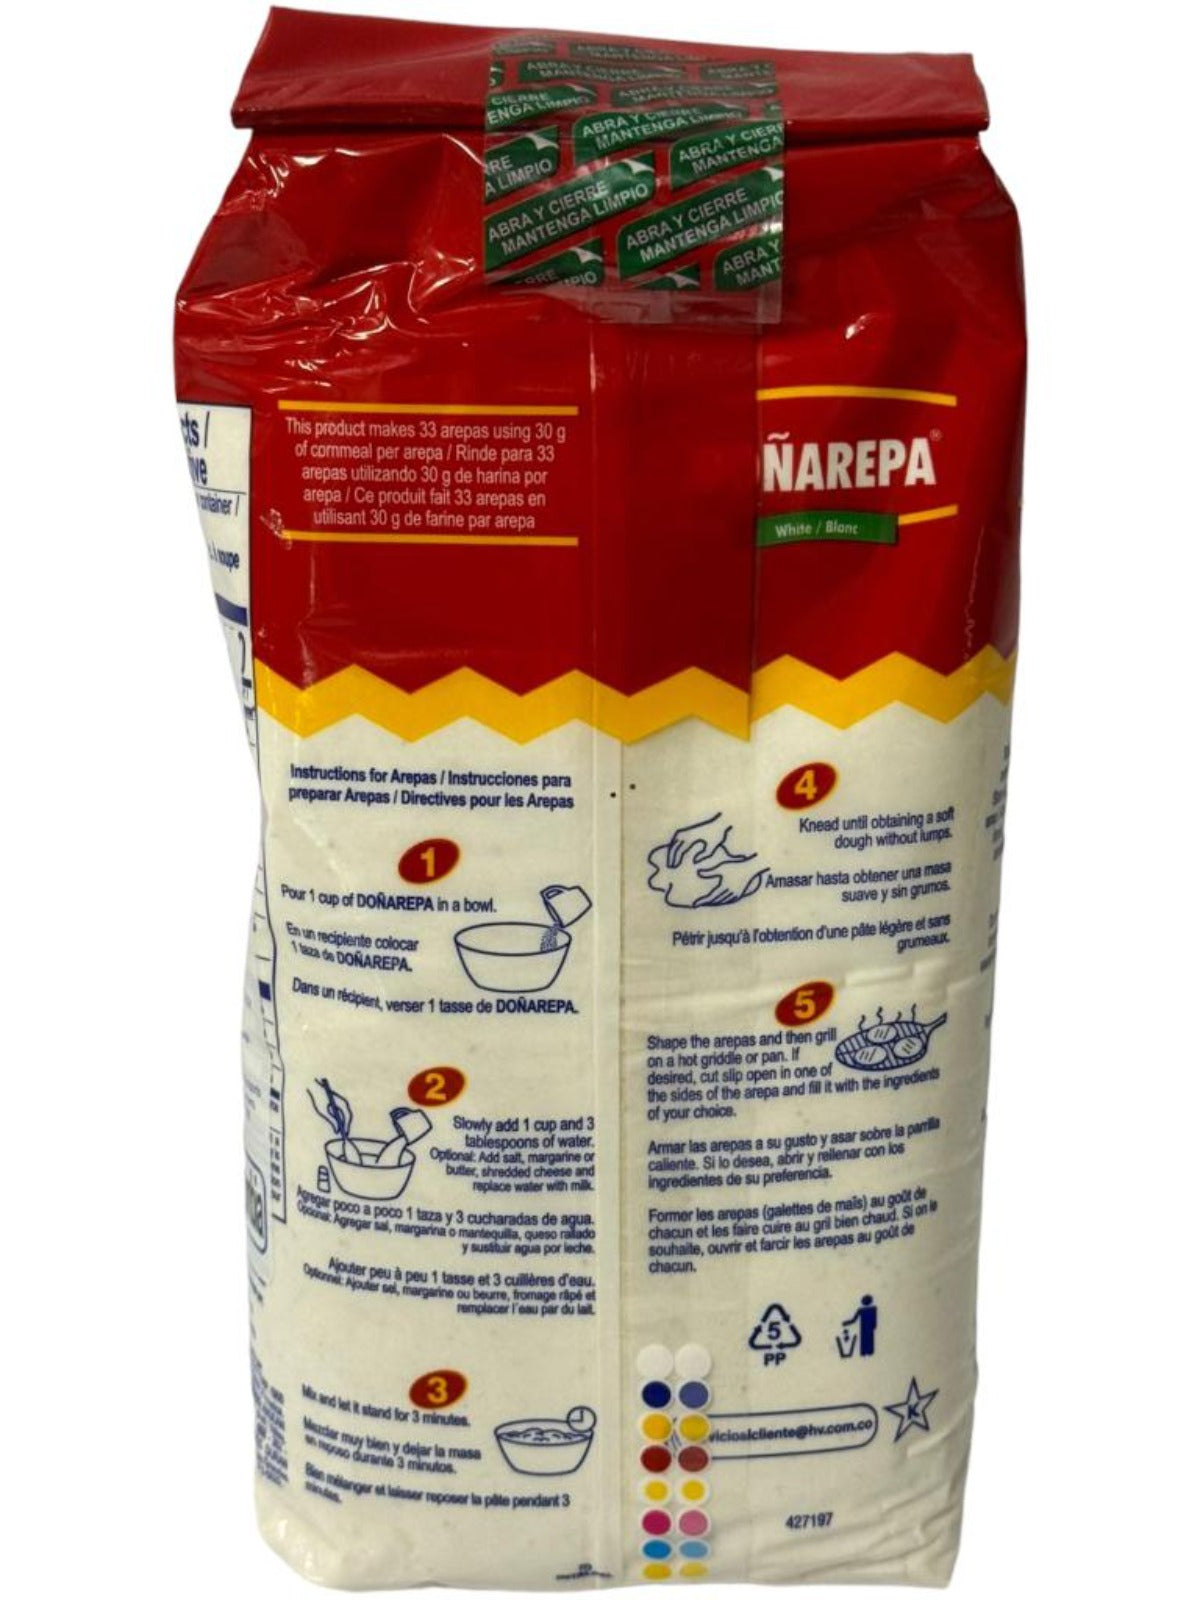 Donarepa Colombian White Corn Flour Twin Pack + Donarepa Colombian Yellow Corn Flour Twin Pack 1kg ea 4kg total